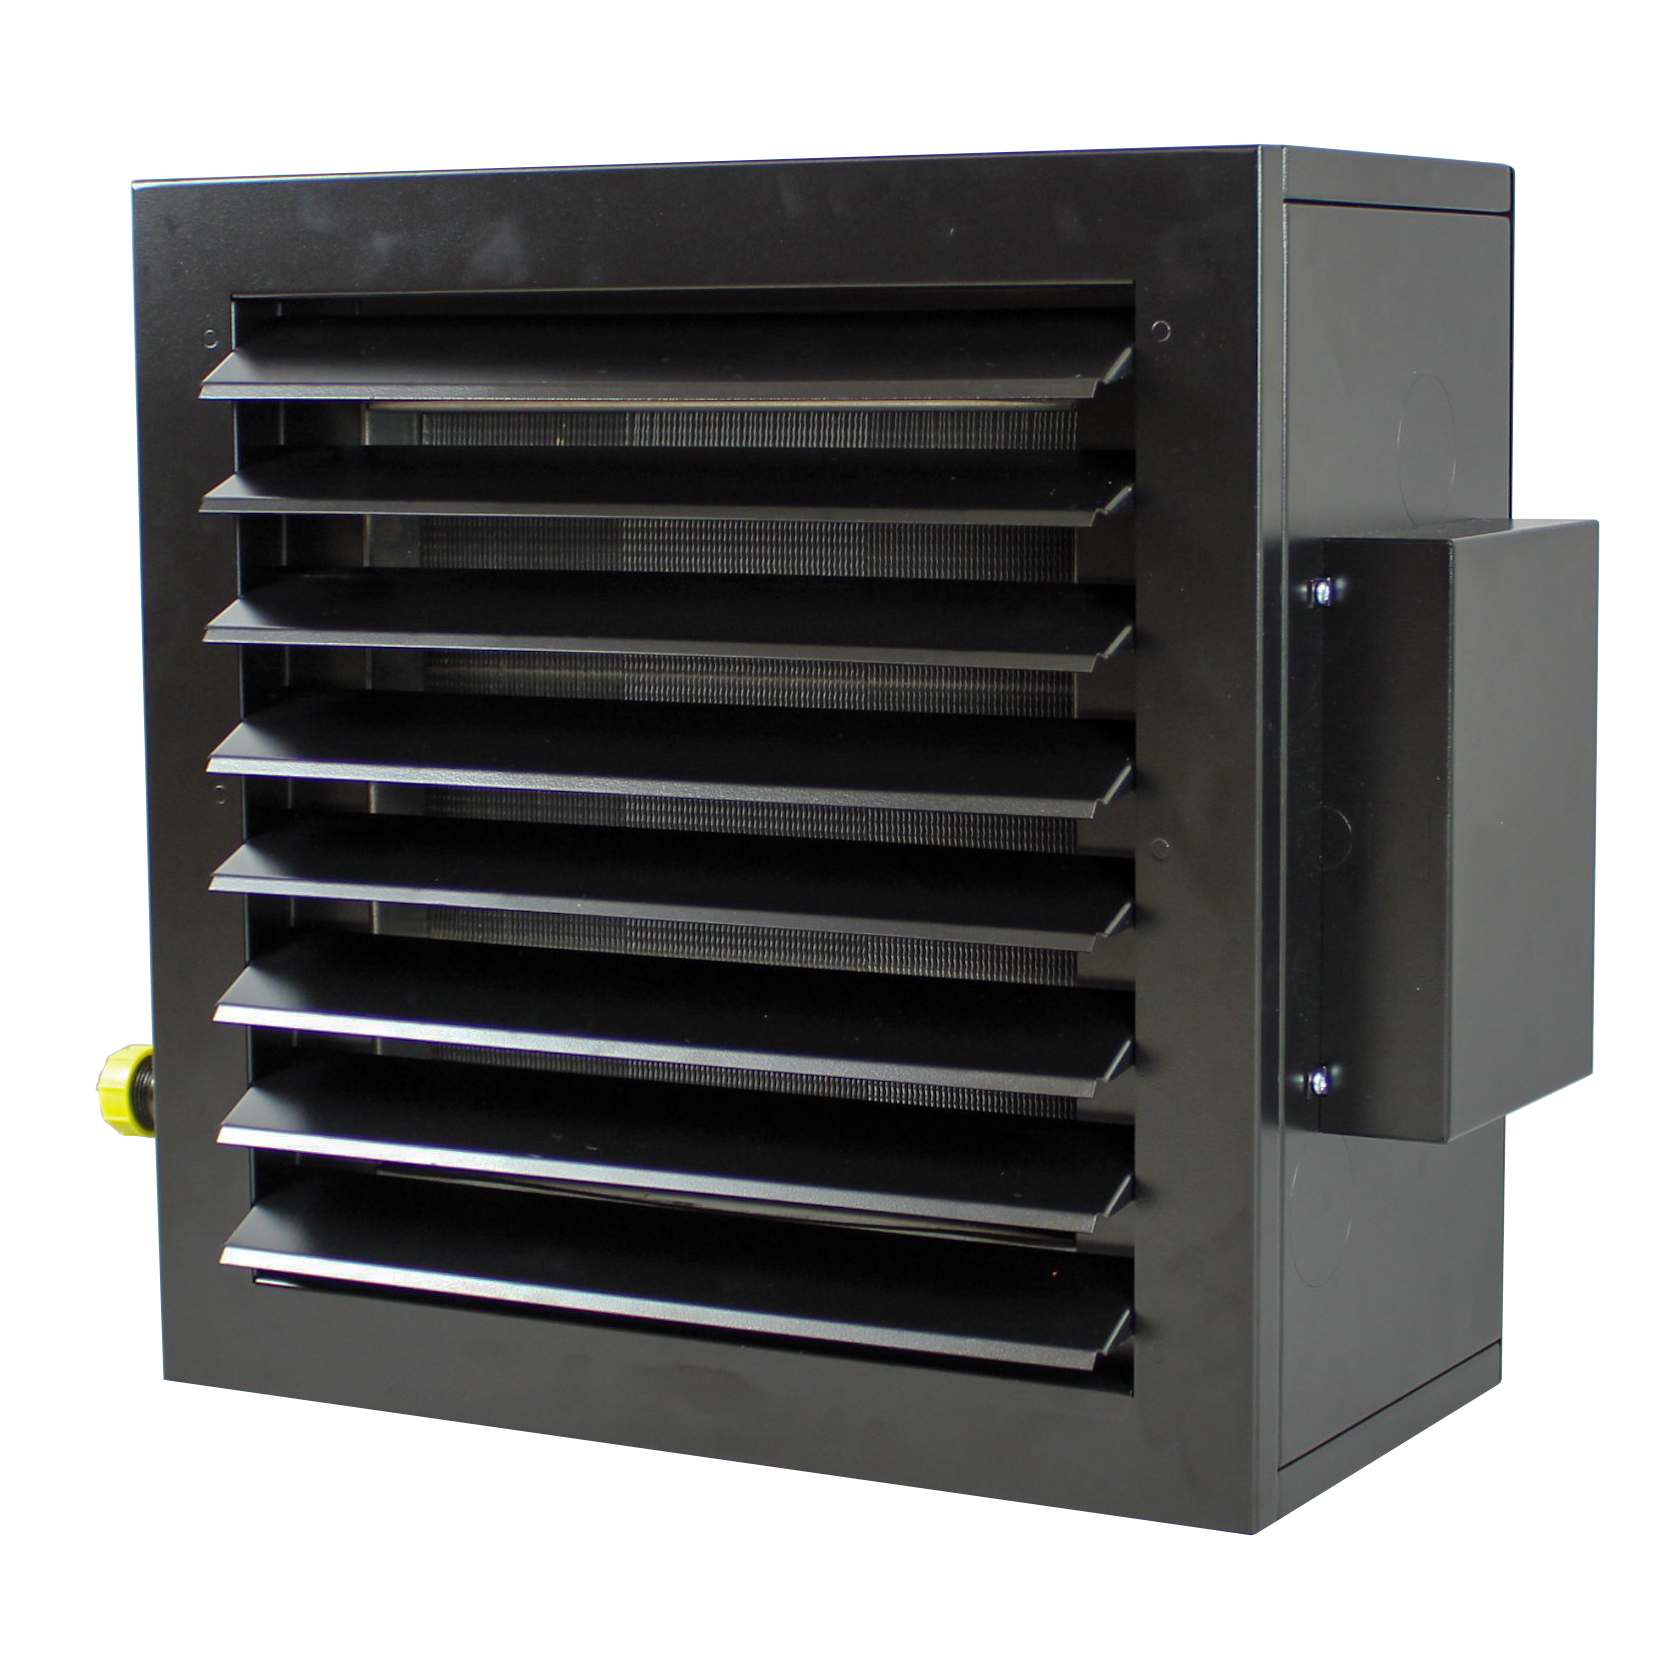 BOSS Copperad Unit Heater 2024 (Black)